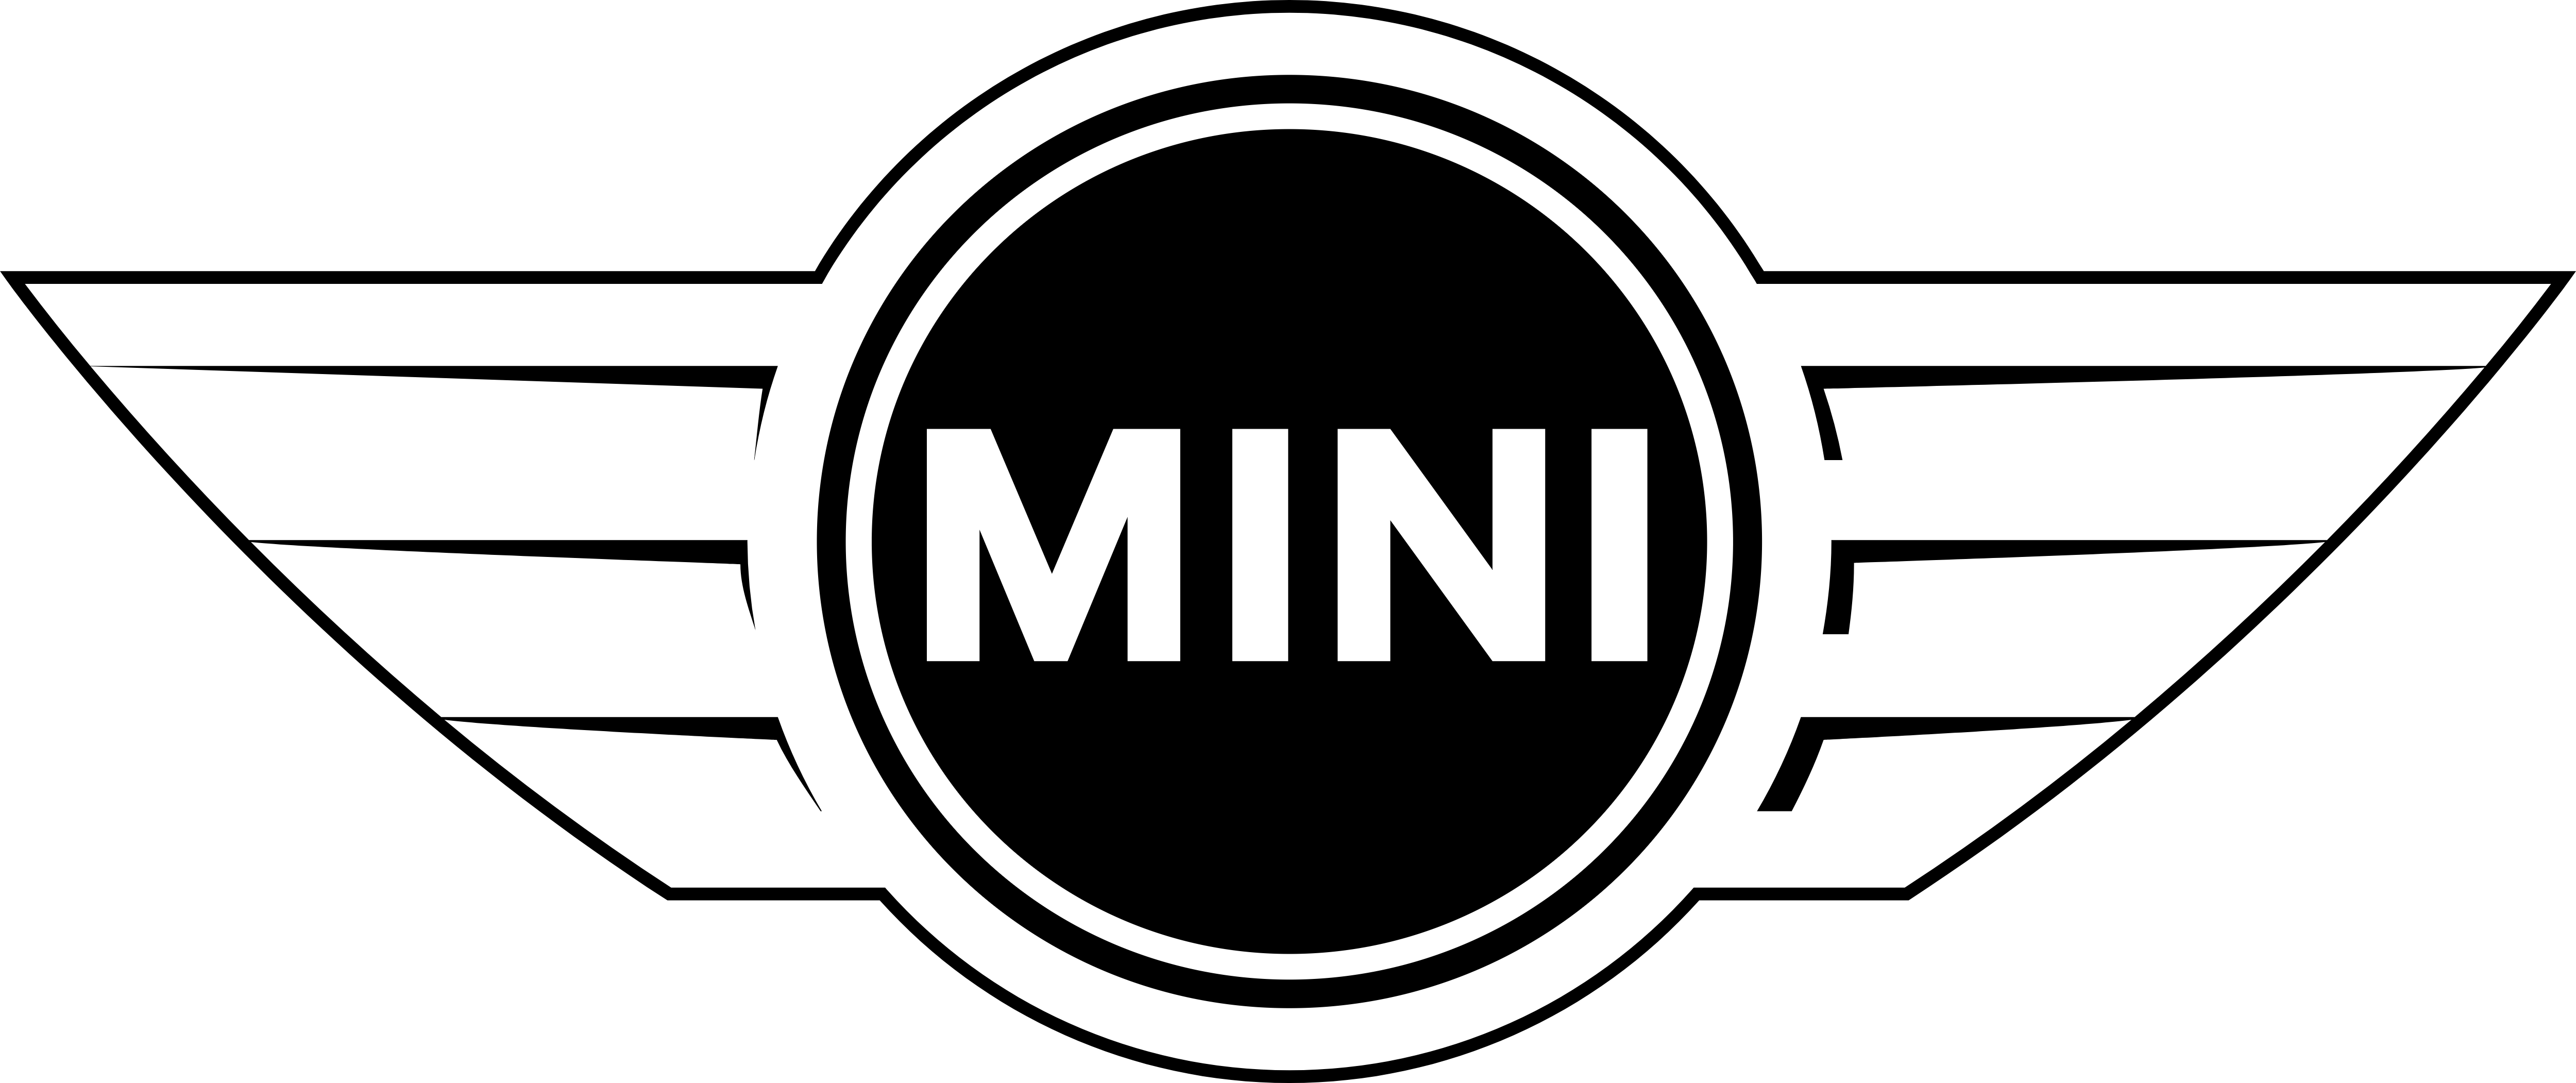 Download Logo Mini Cooper Bmw Car Free HQ Image HQ PNG Image